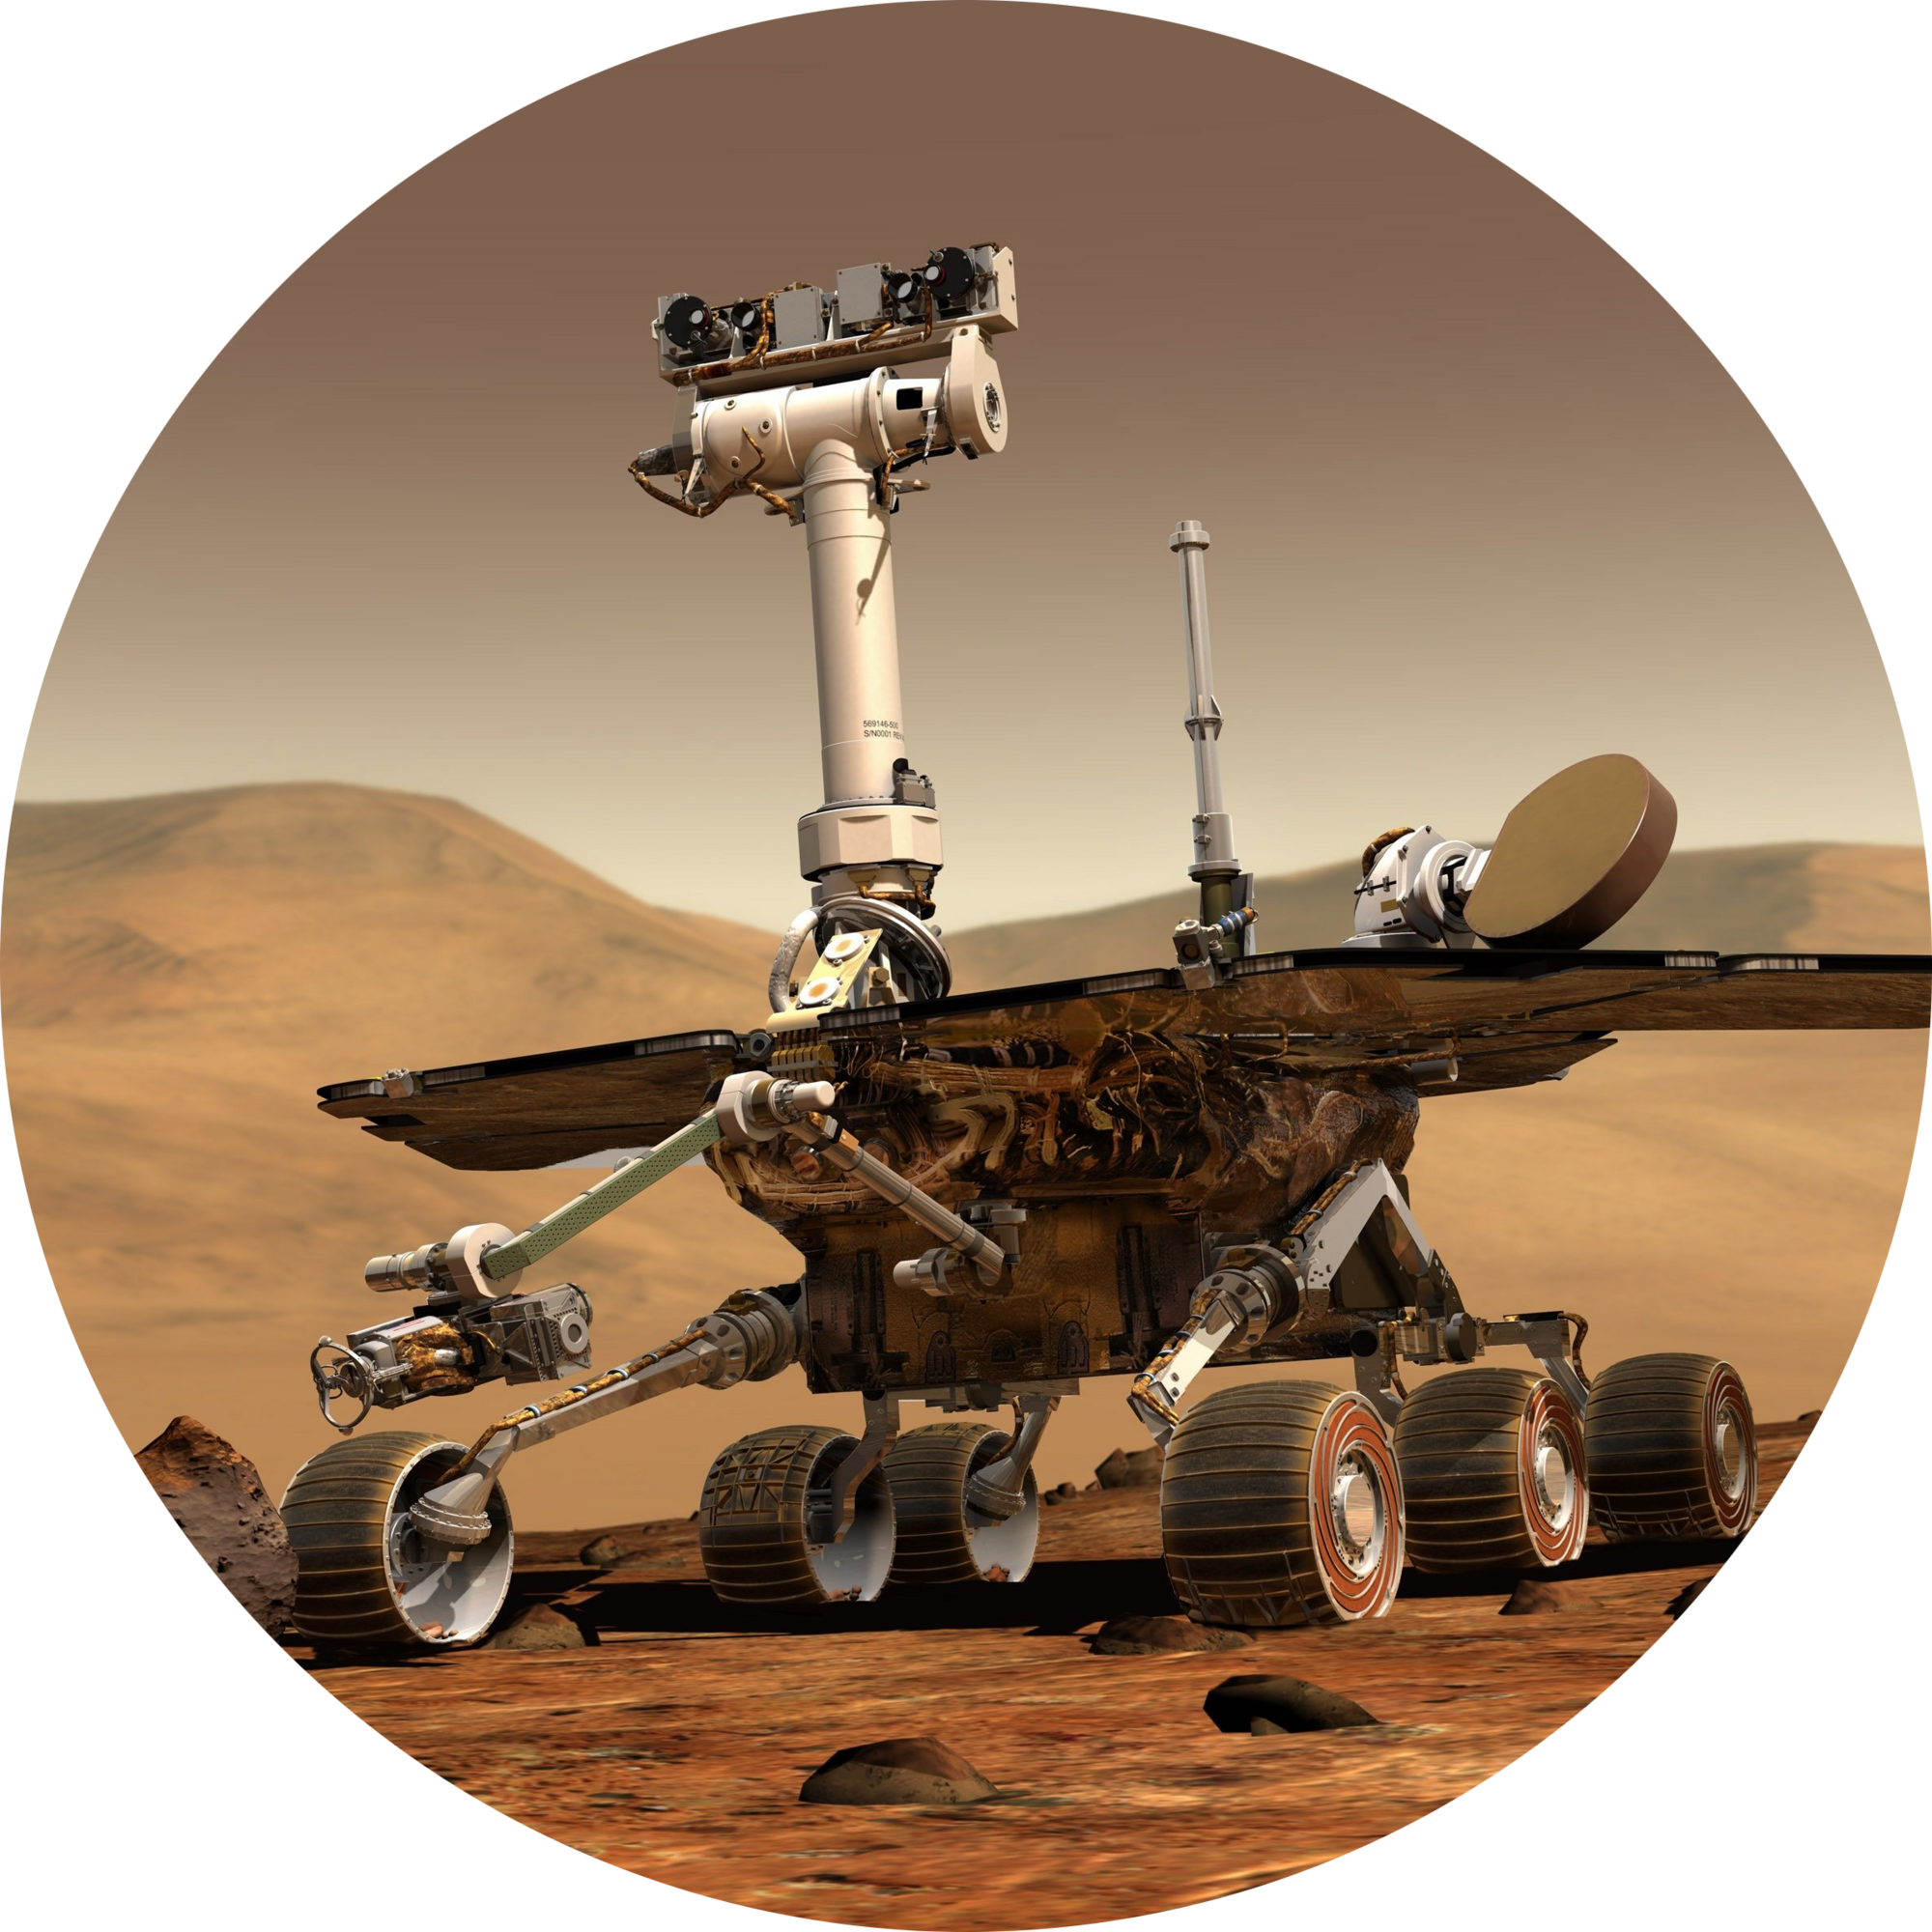 programm_7-8-klasse_mars-rover.png